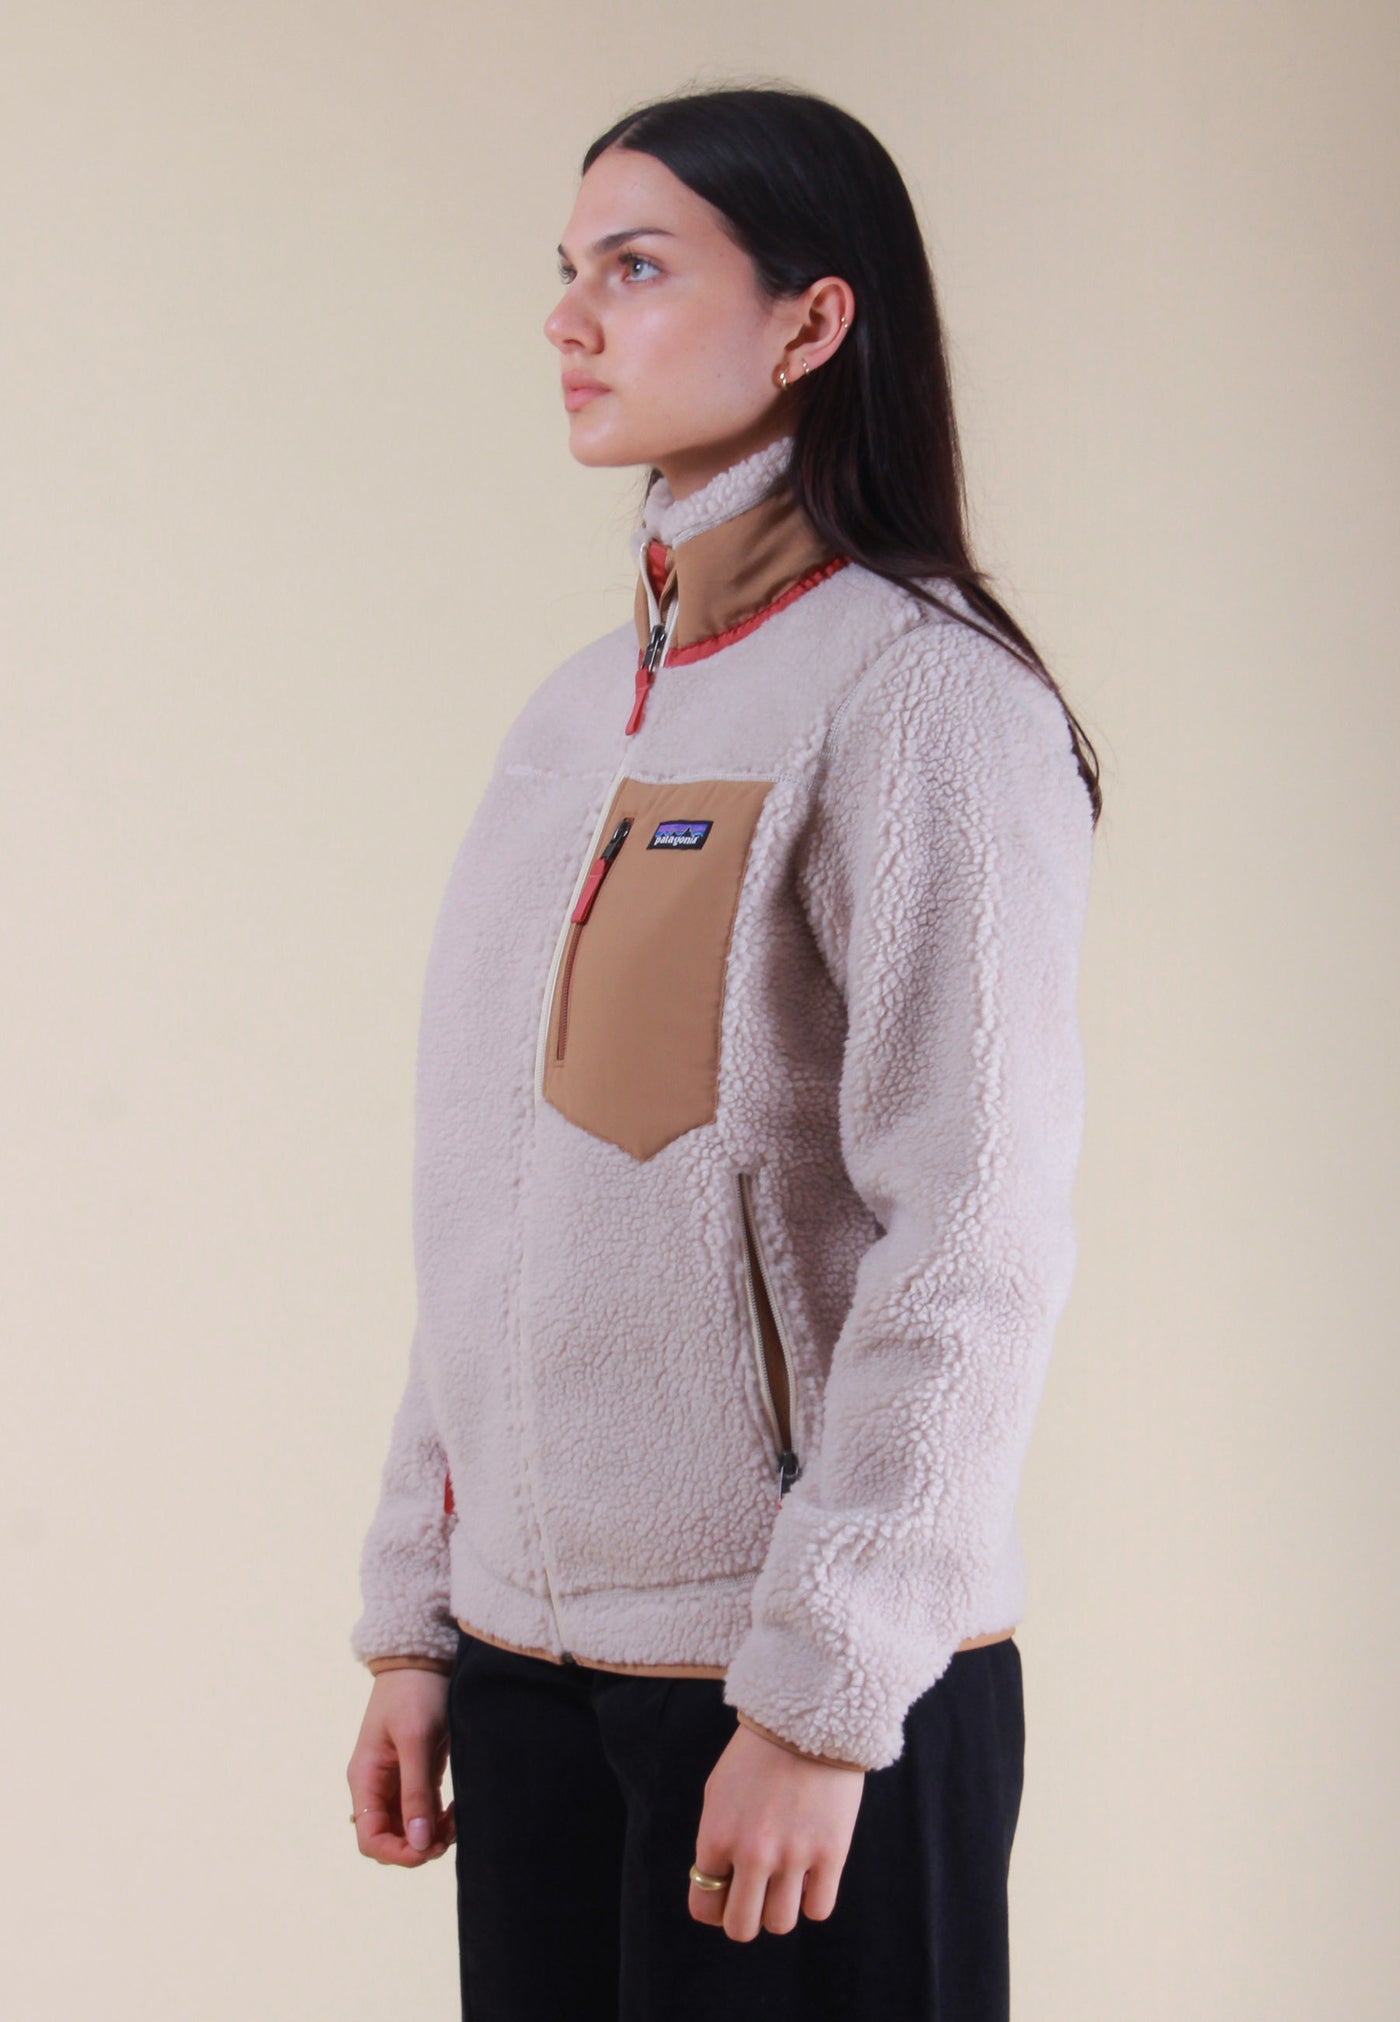 Patagonia Classic Retro-X® Fleece Jacket - Women's